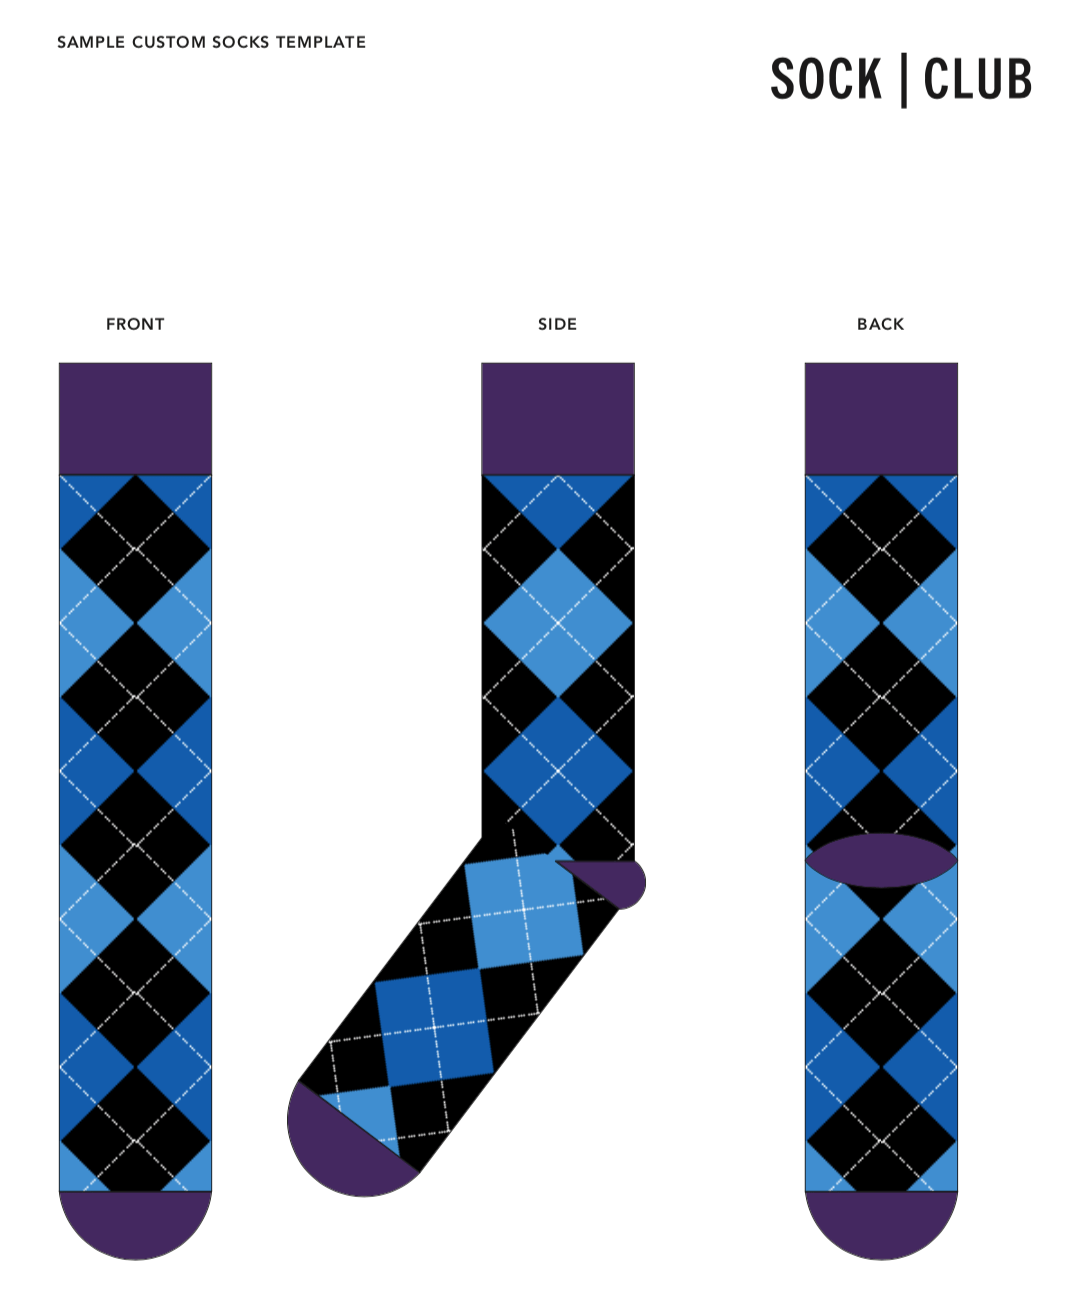 Sock Club’s mockup or sample custom socks template